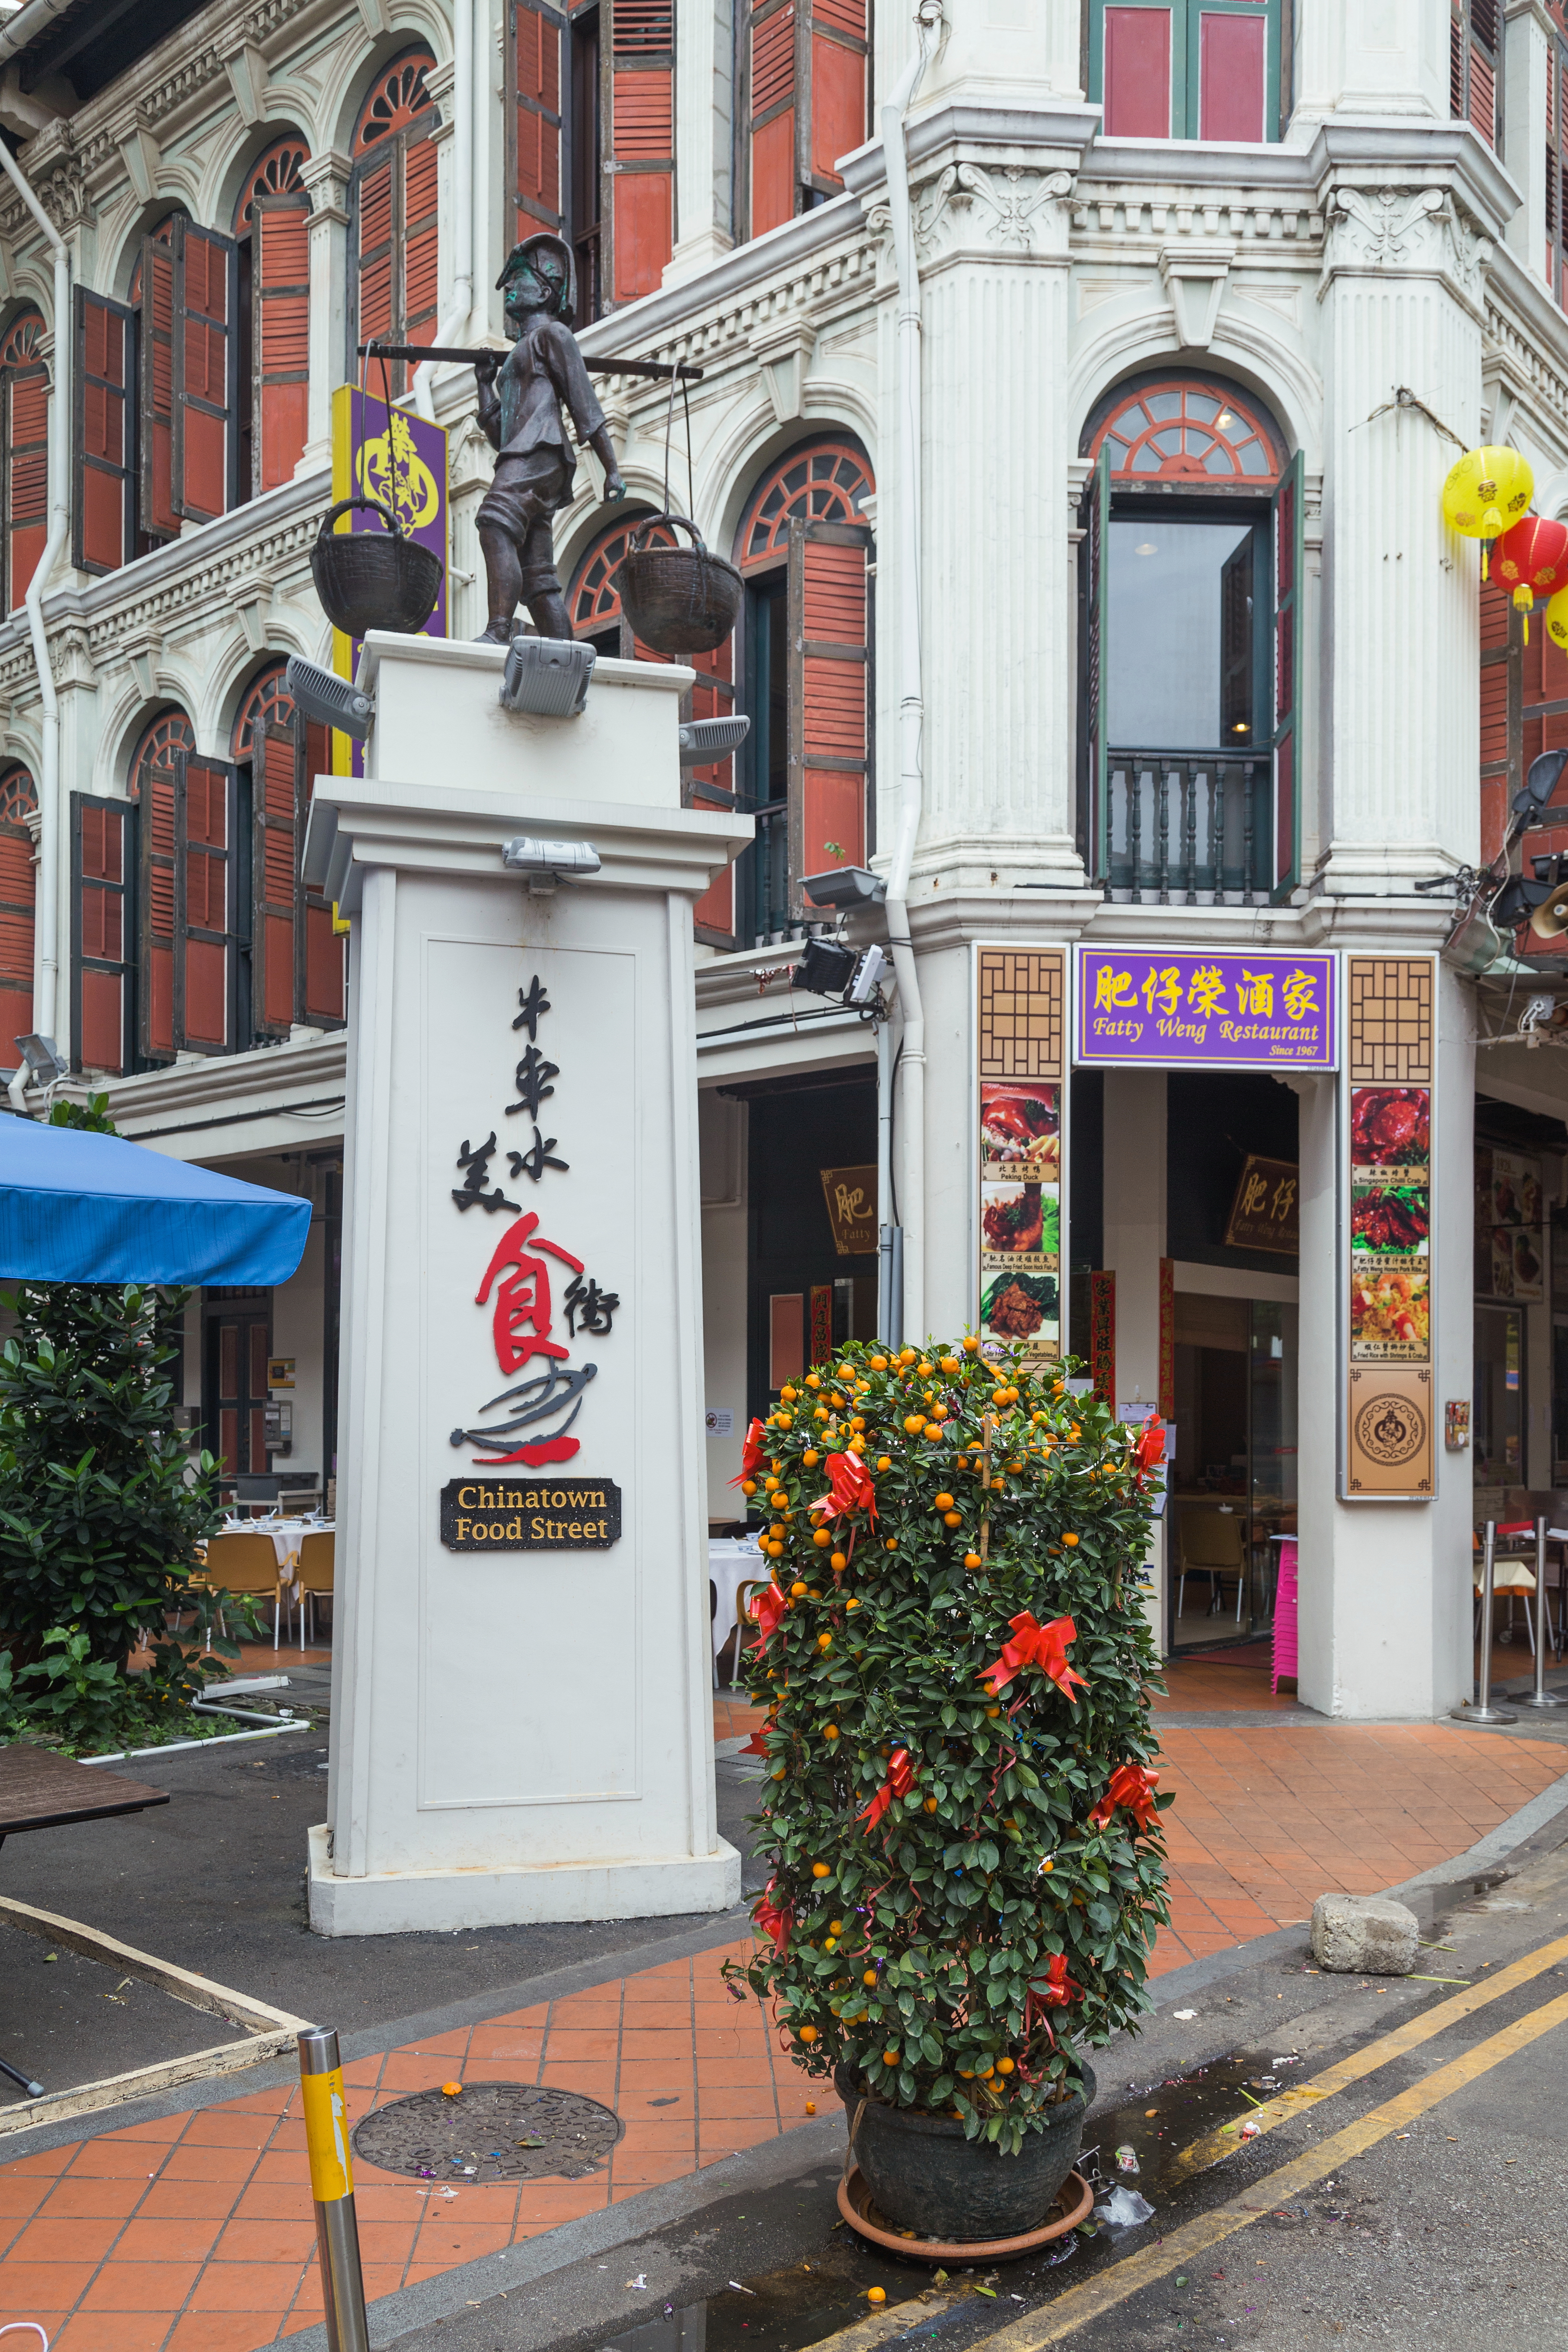 2016 Singapur, Chinatown, Ulica Smitha - Chinatown Food Street (05)